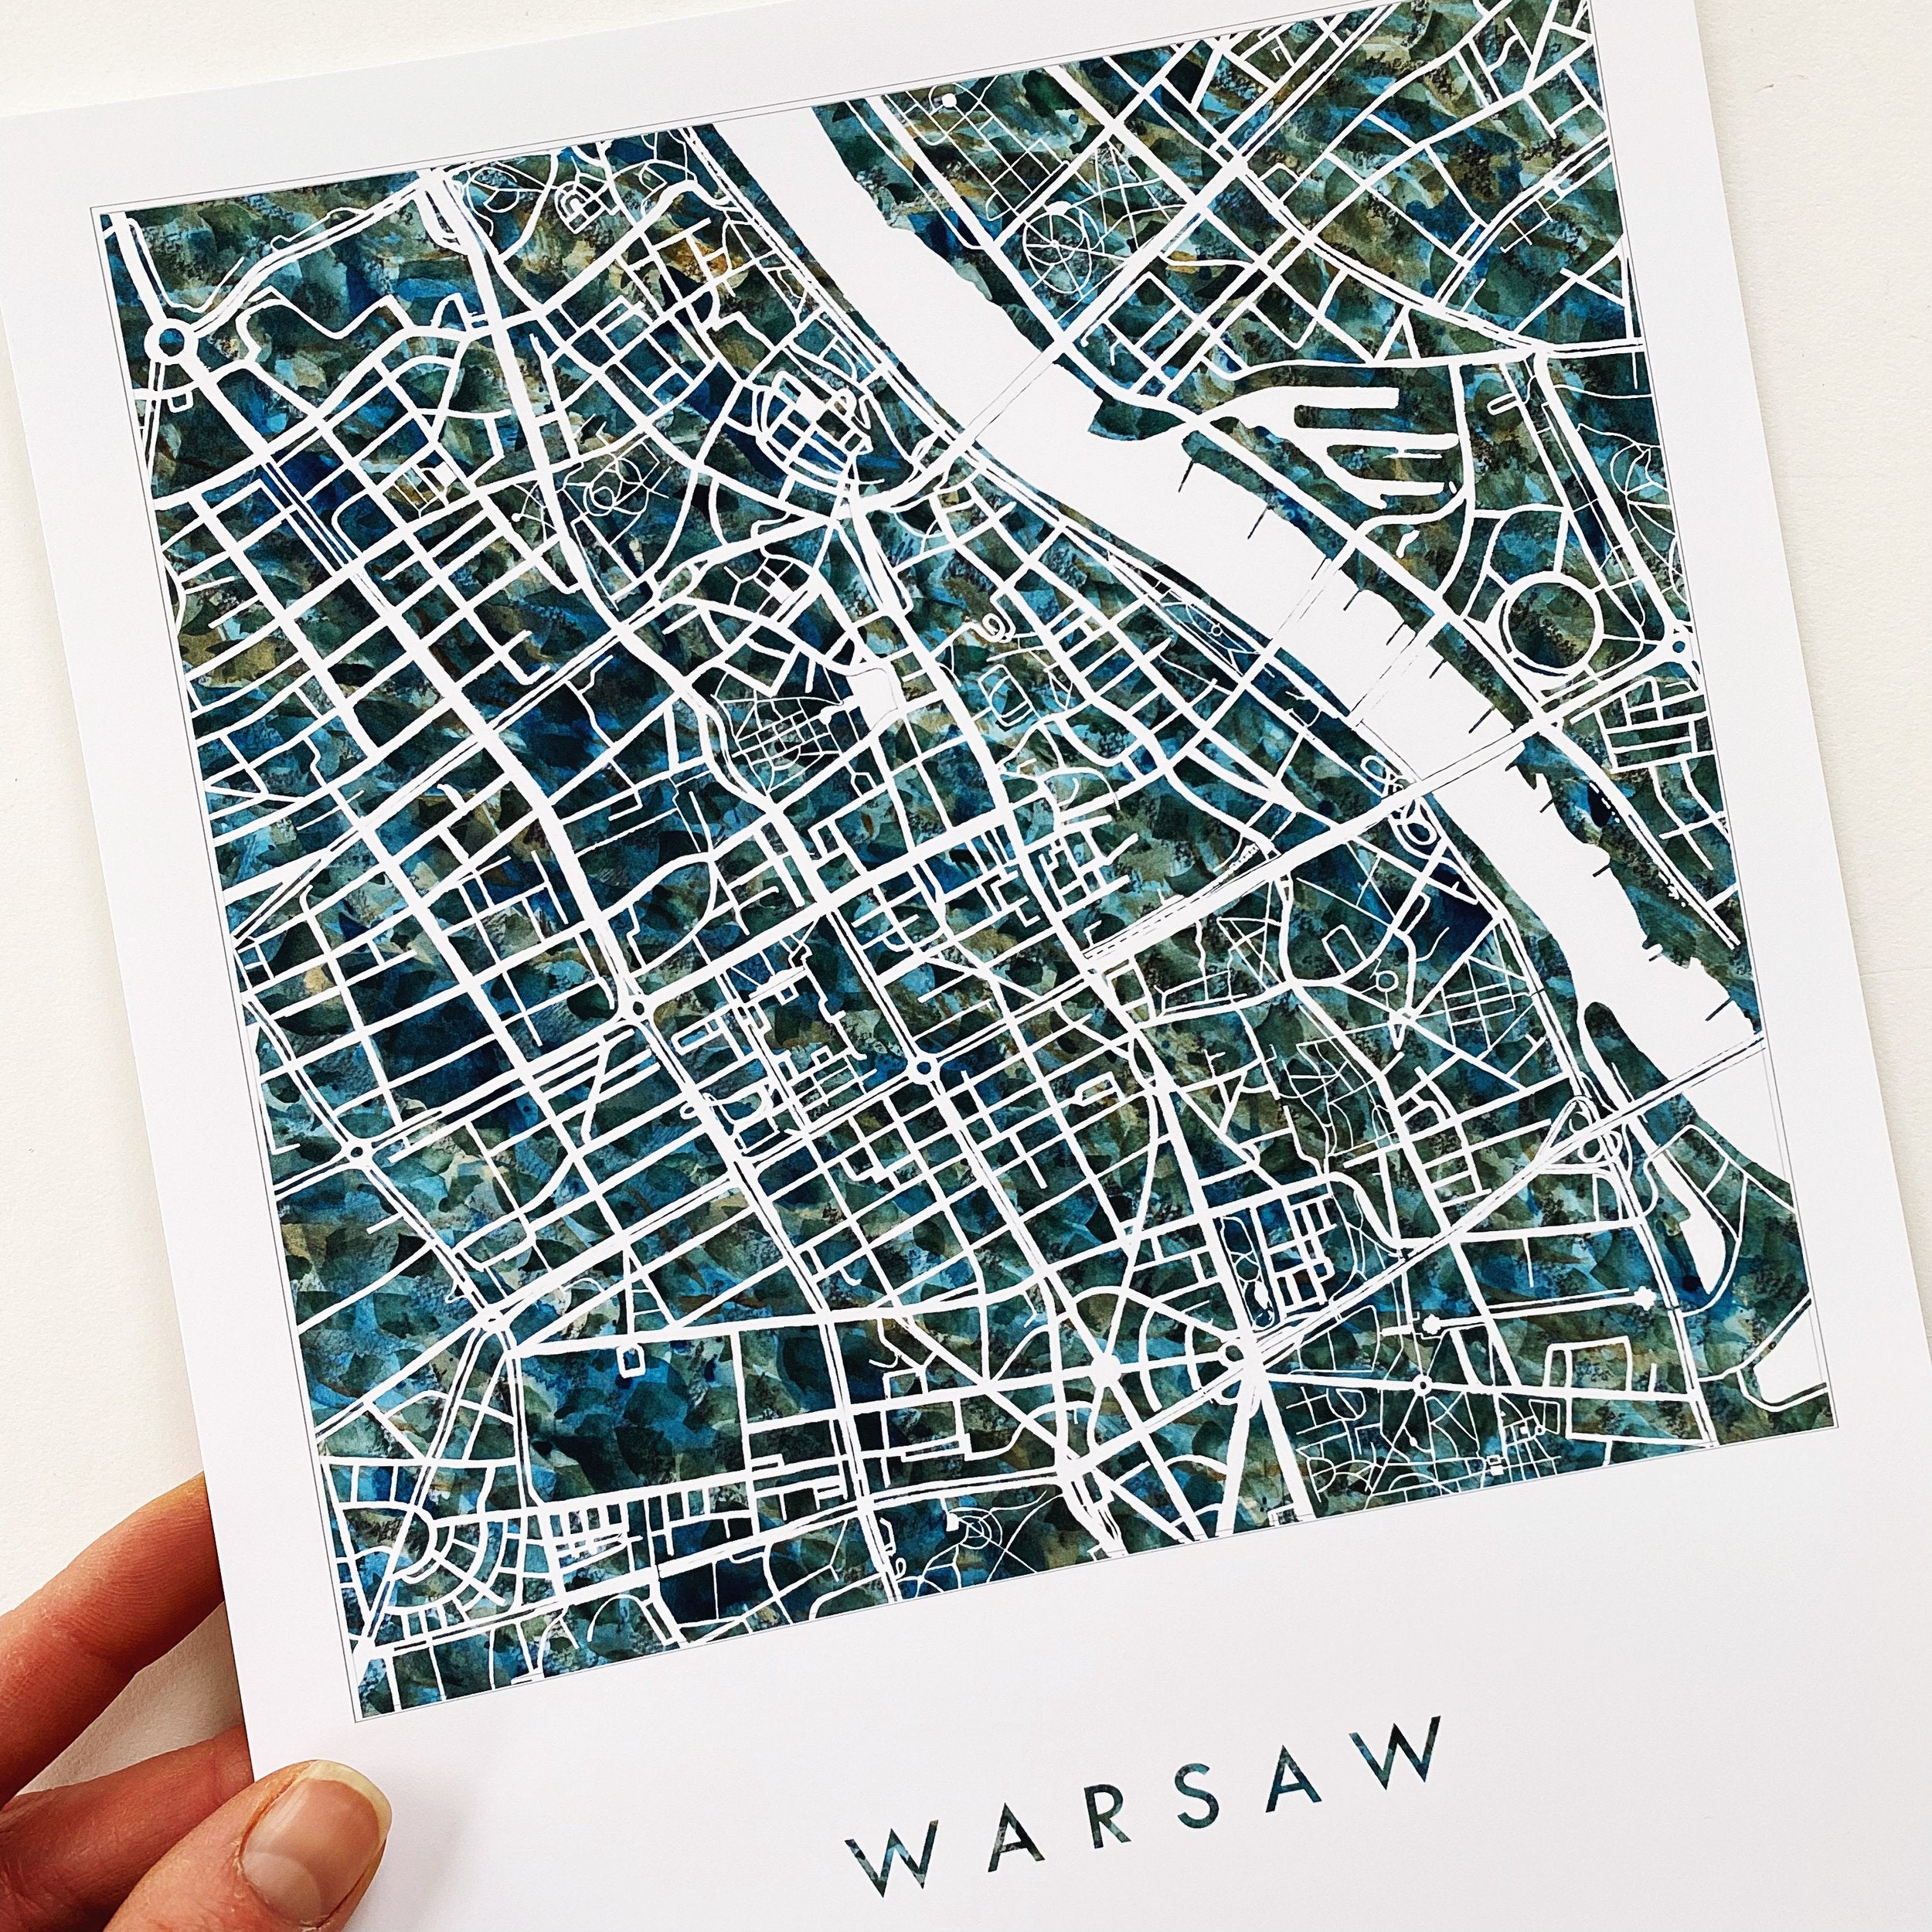 WARSAW Urban Fabrics City Map: PRINT